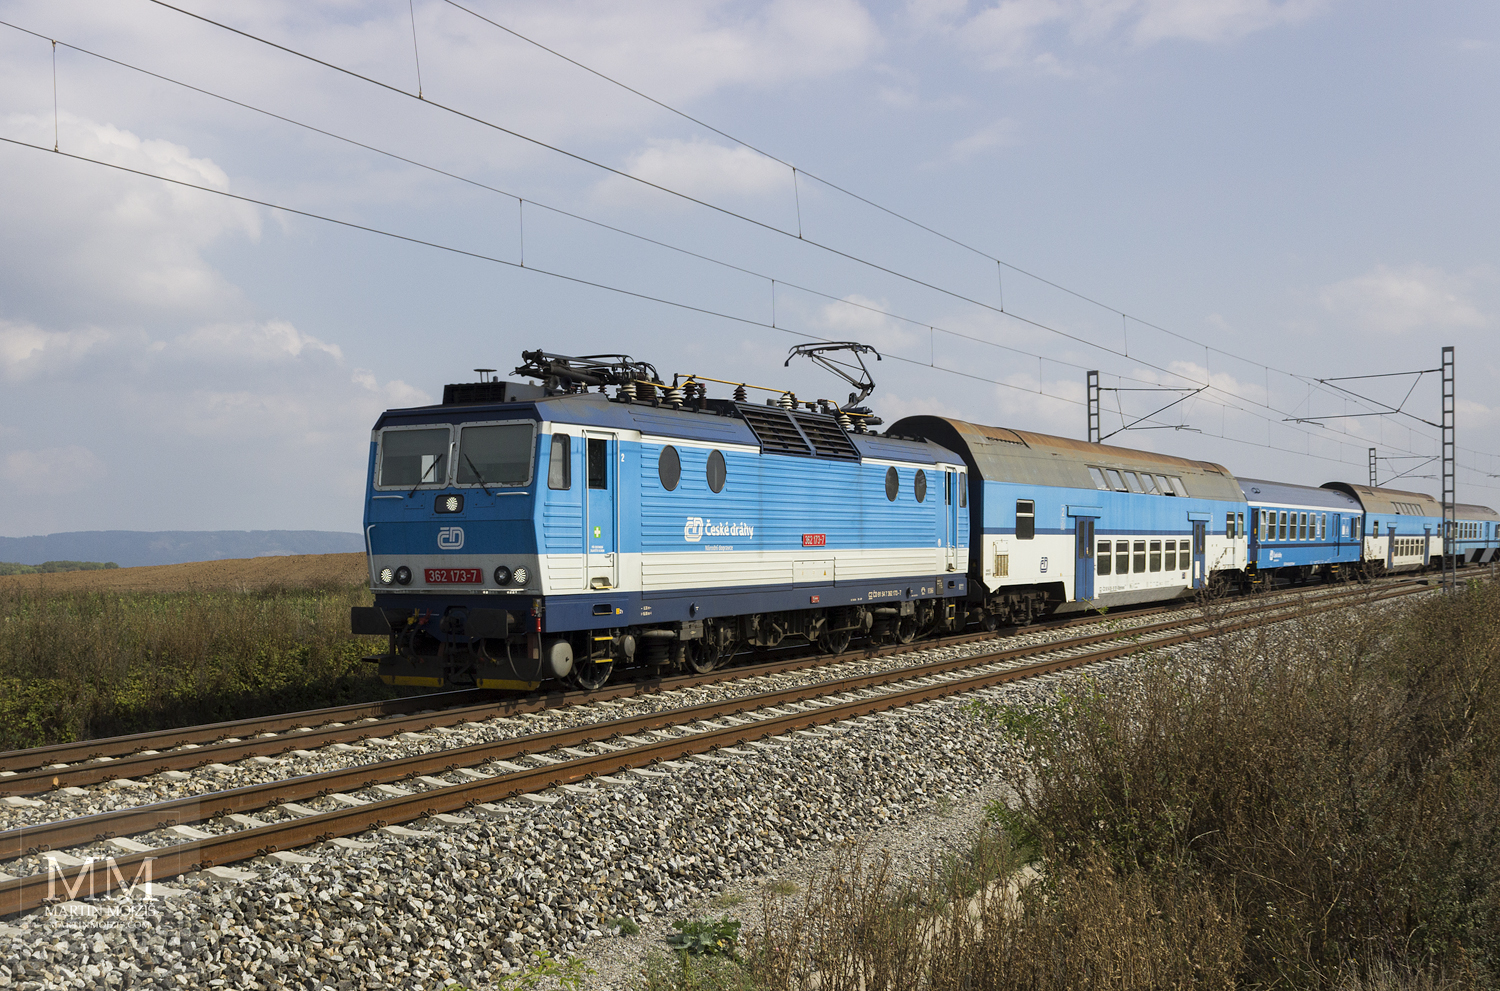 Photograph of passenger train in head with locomotive Skoda 362.